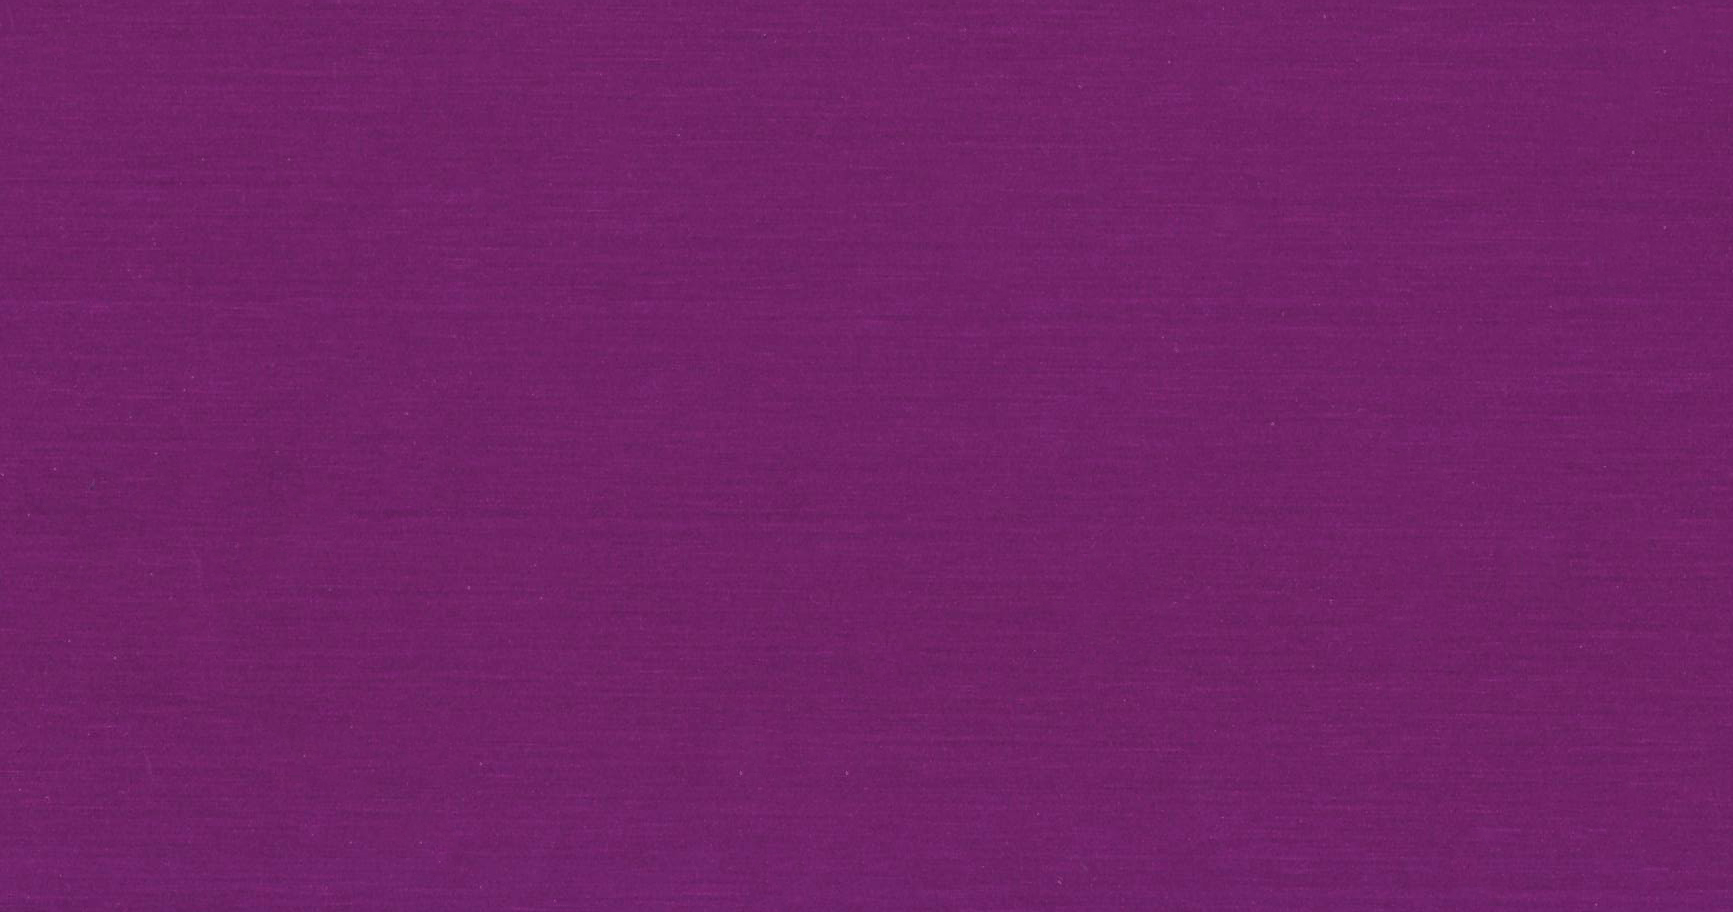 alumex-ag-muri-eloxieren-farbig-angebot-violett